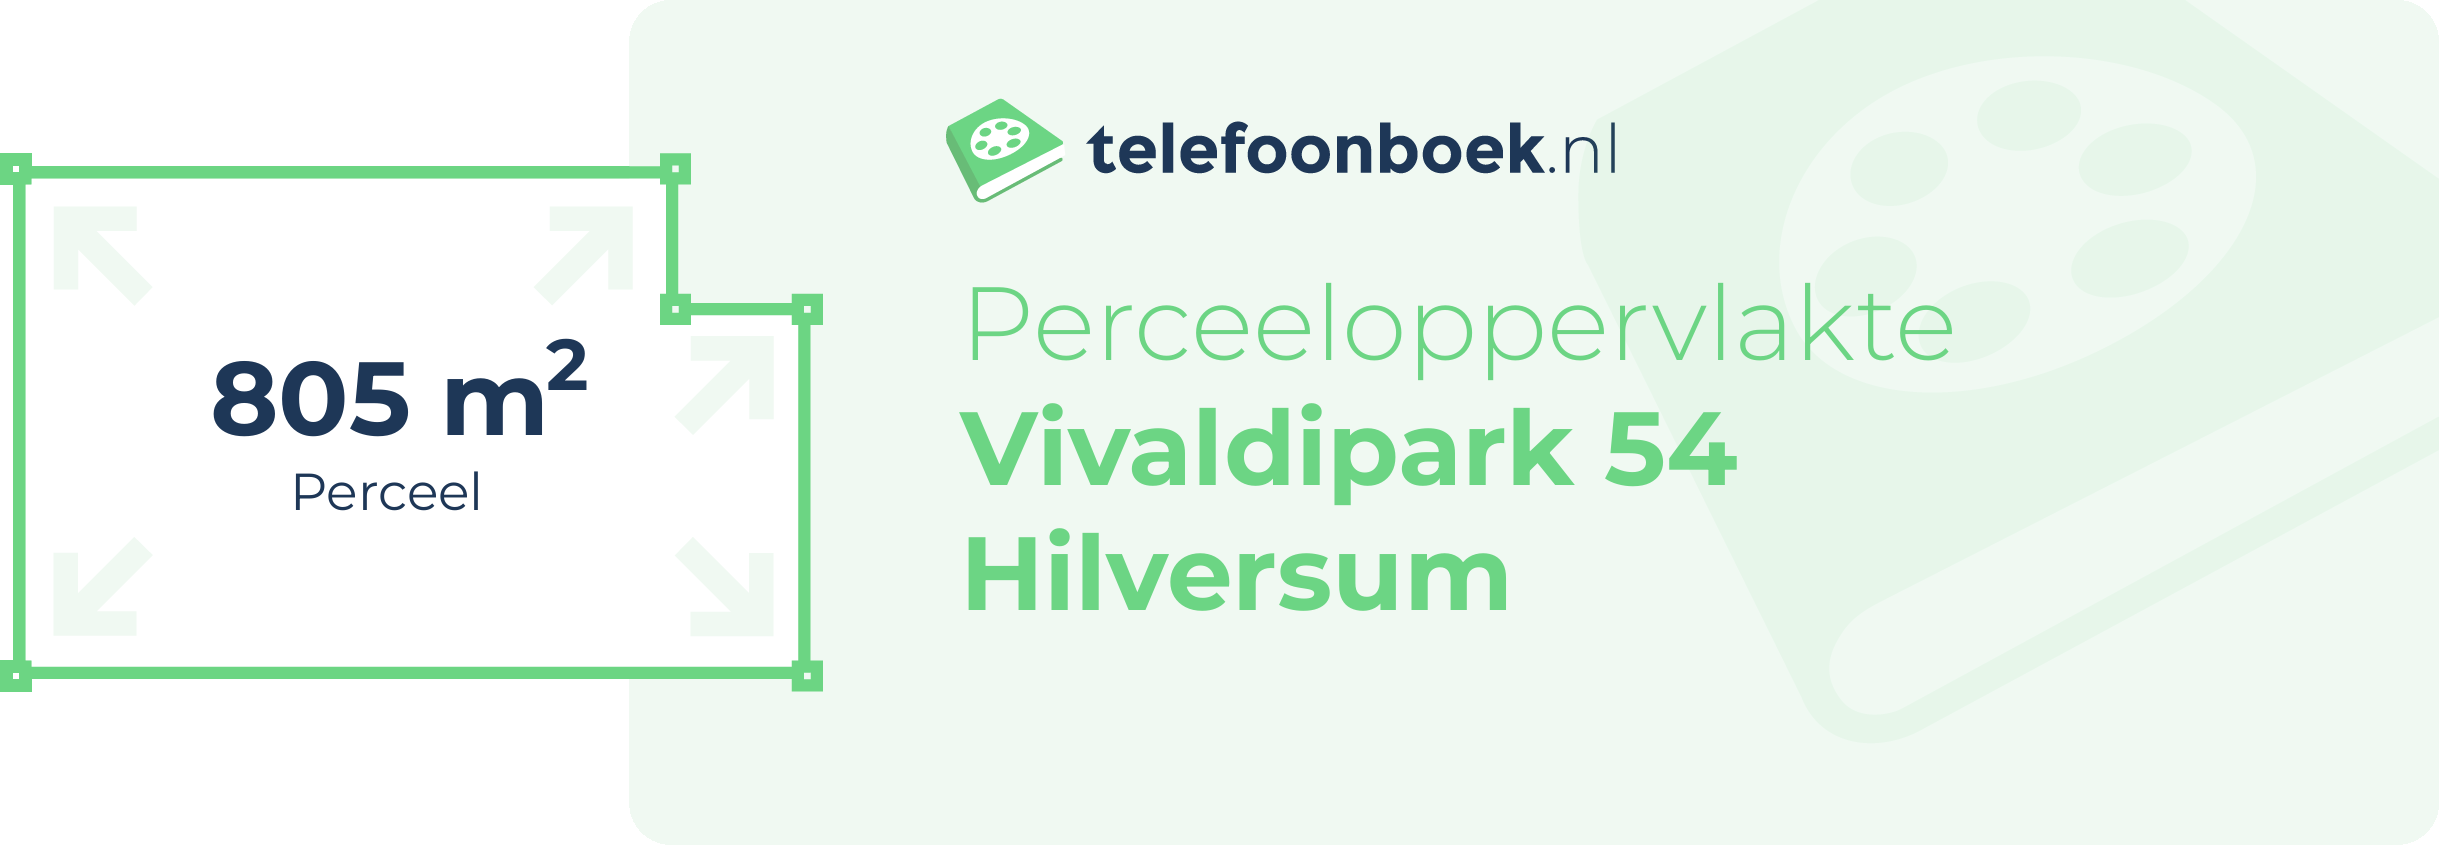 Perceeloppervlakte Vivaldipark 54 Hilversum